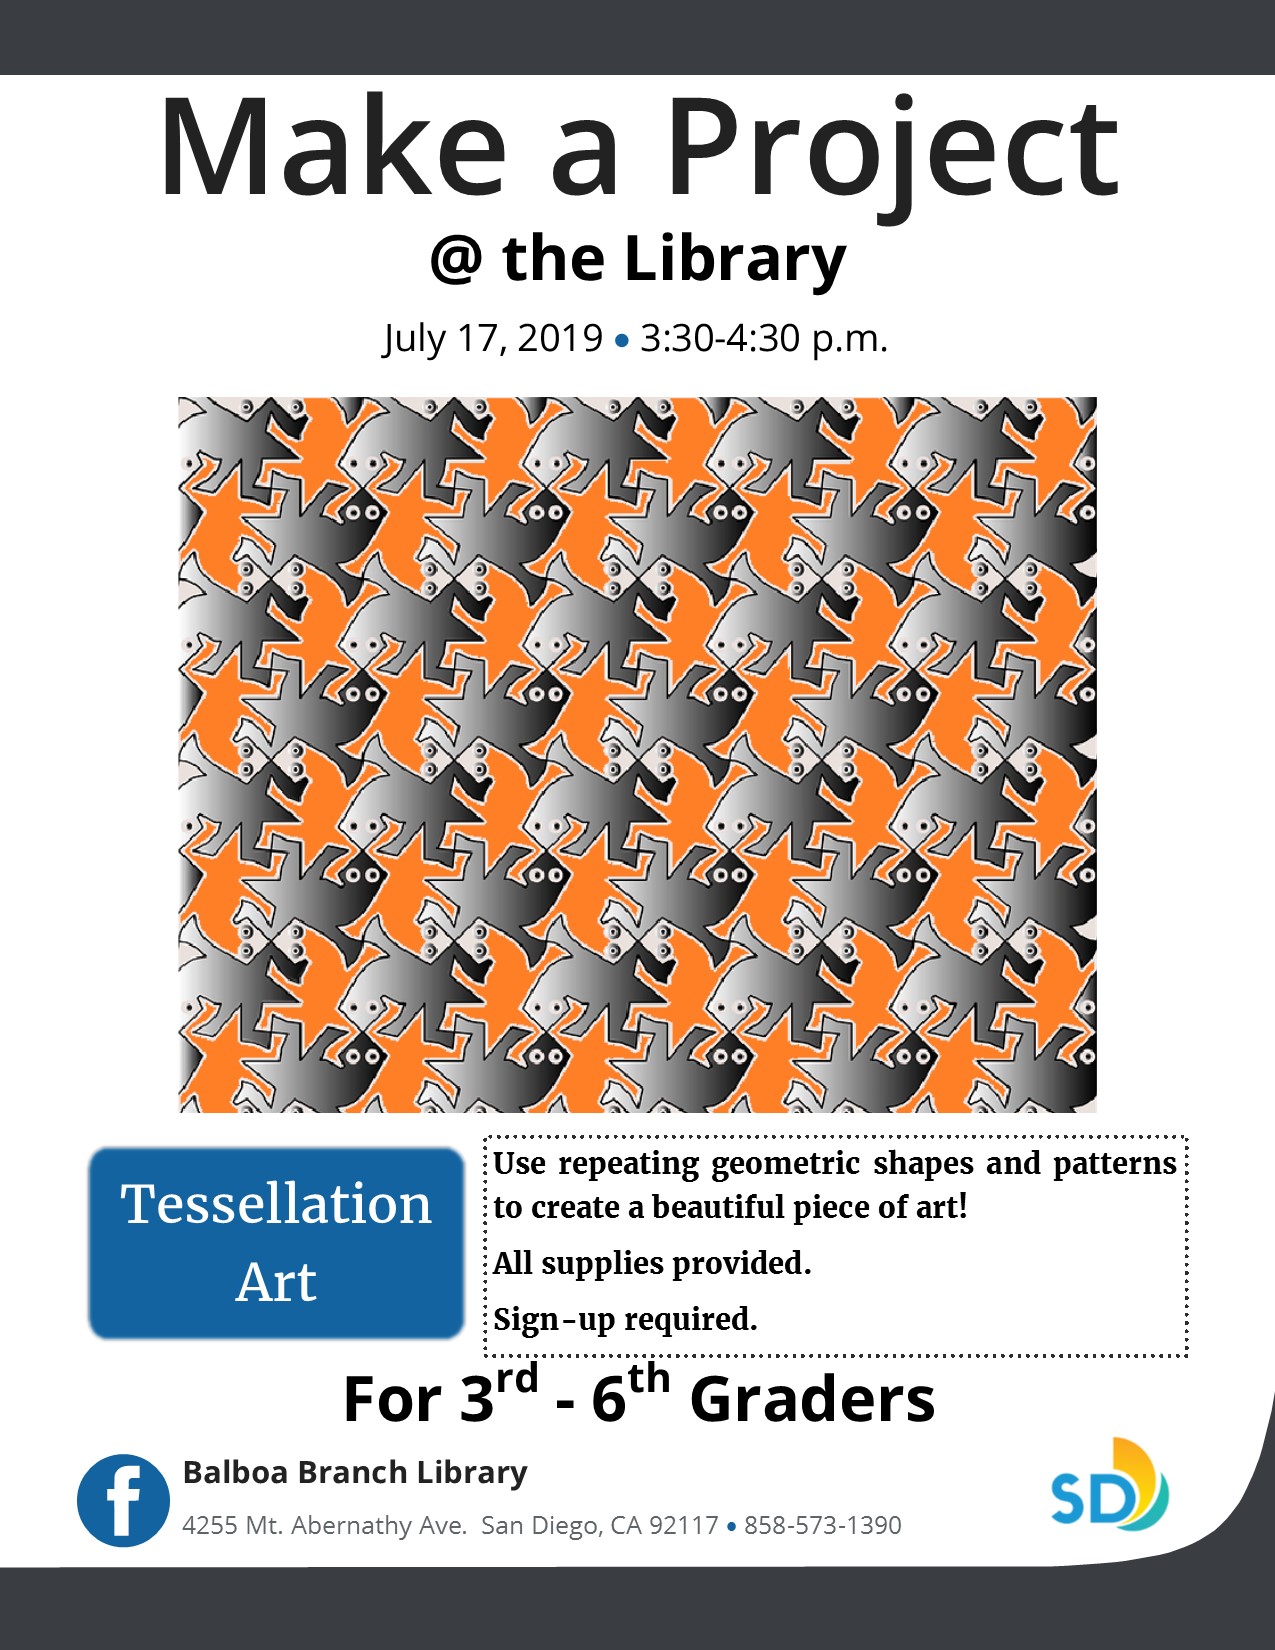 Tessellation design image